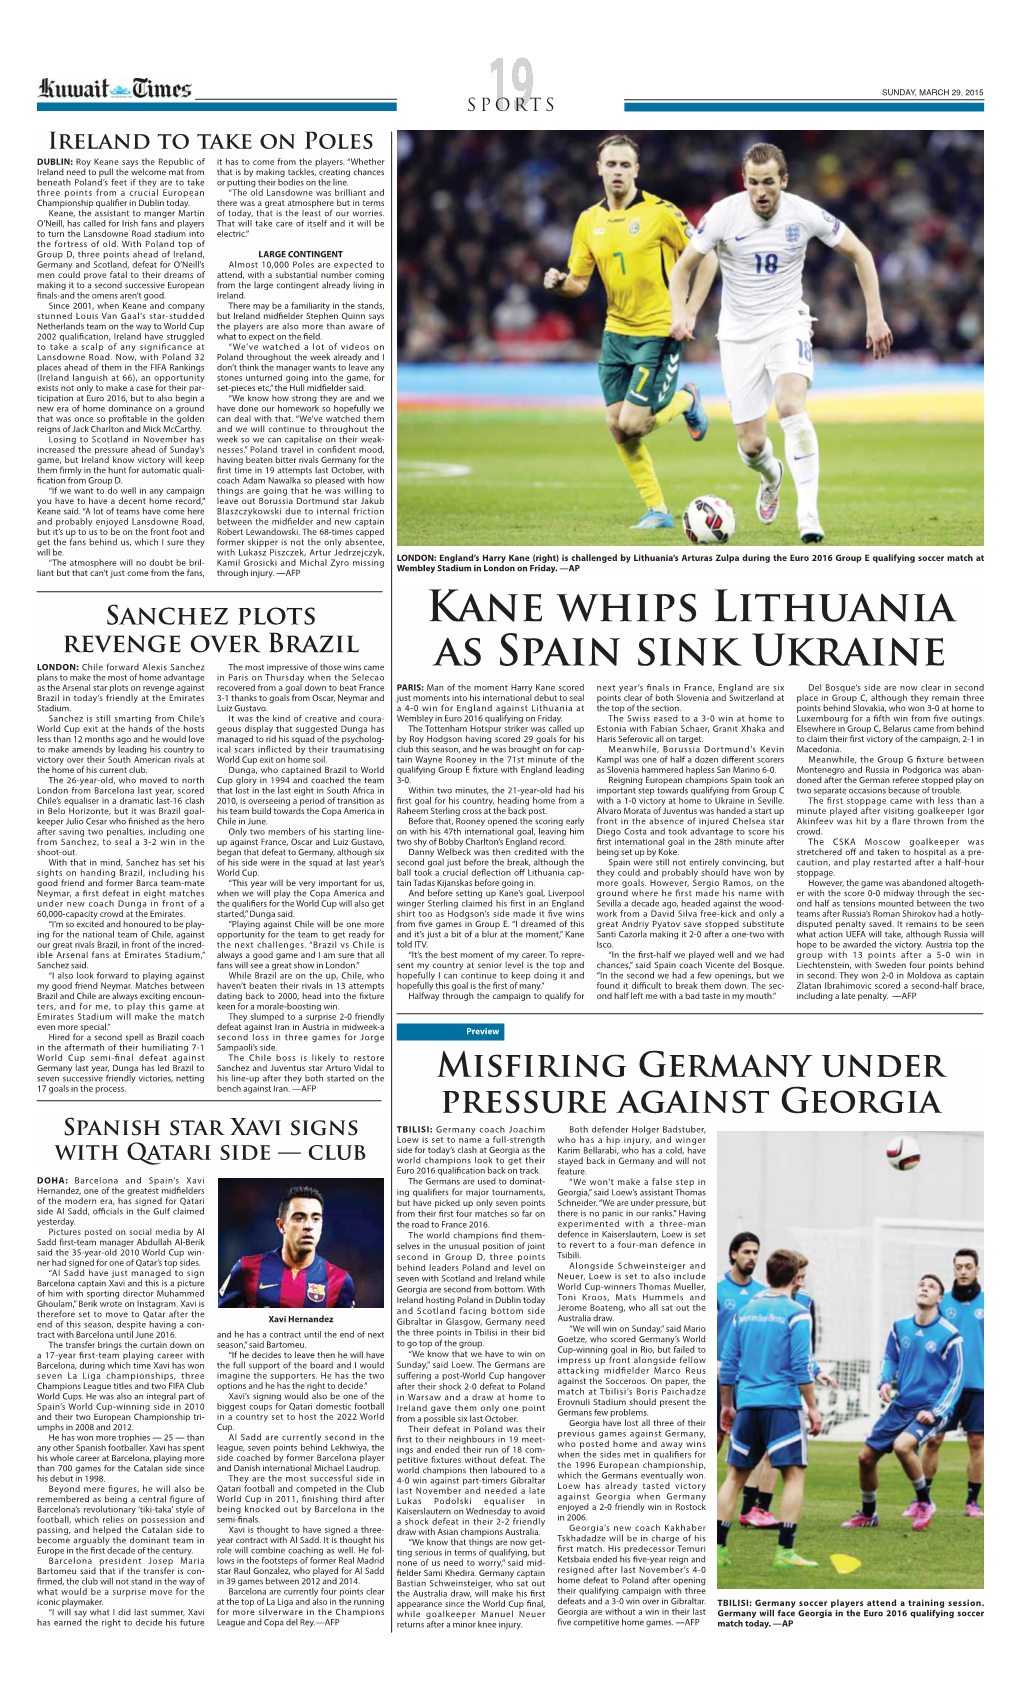 Kane Whips Lithuania As Spain Sink Ukraine